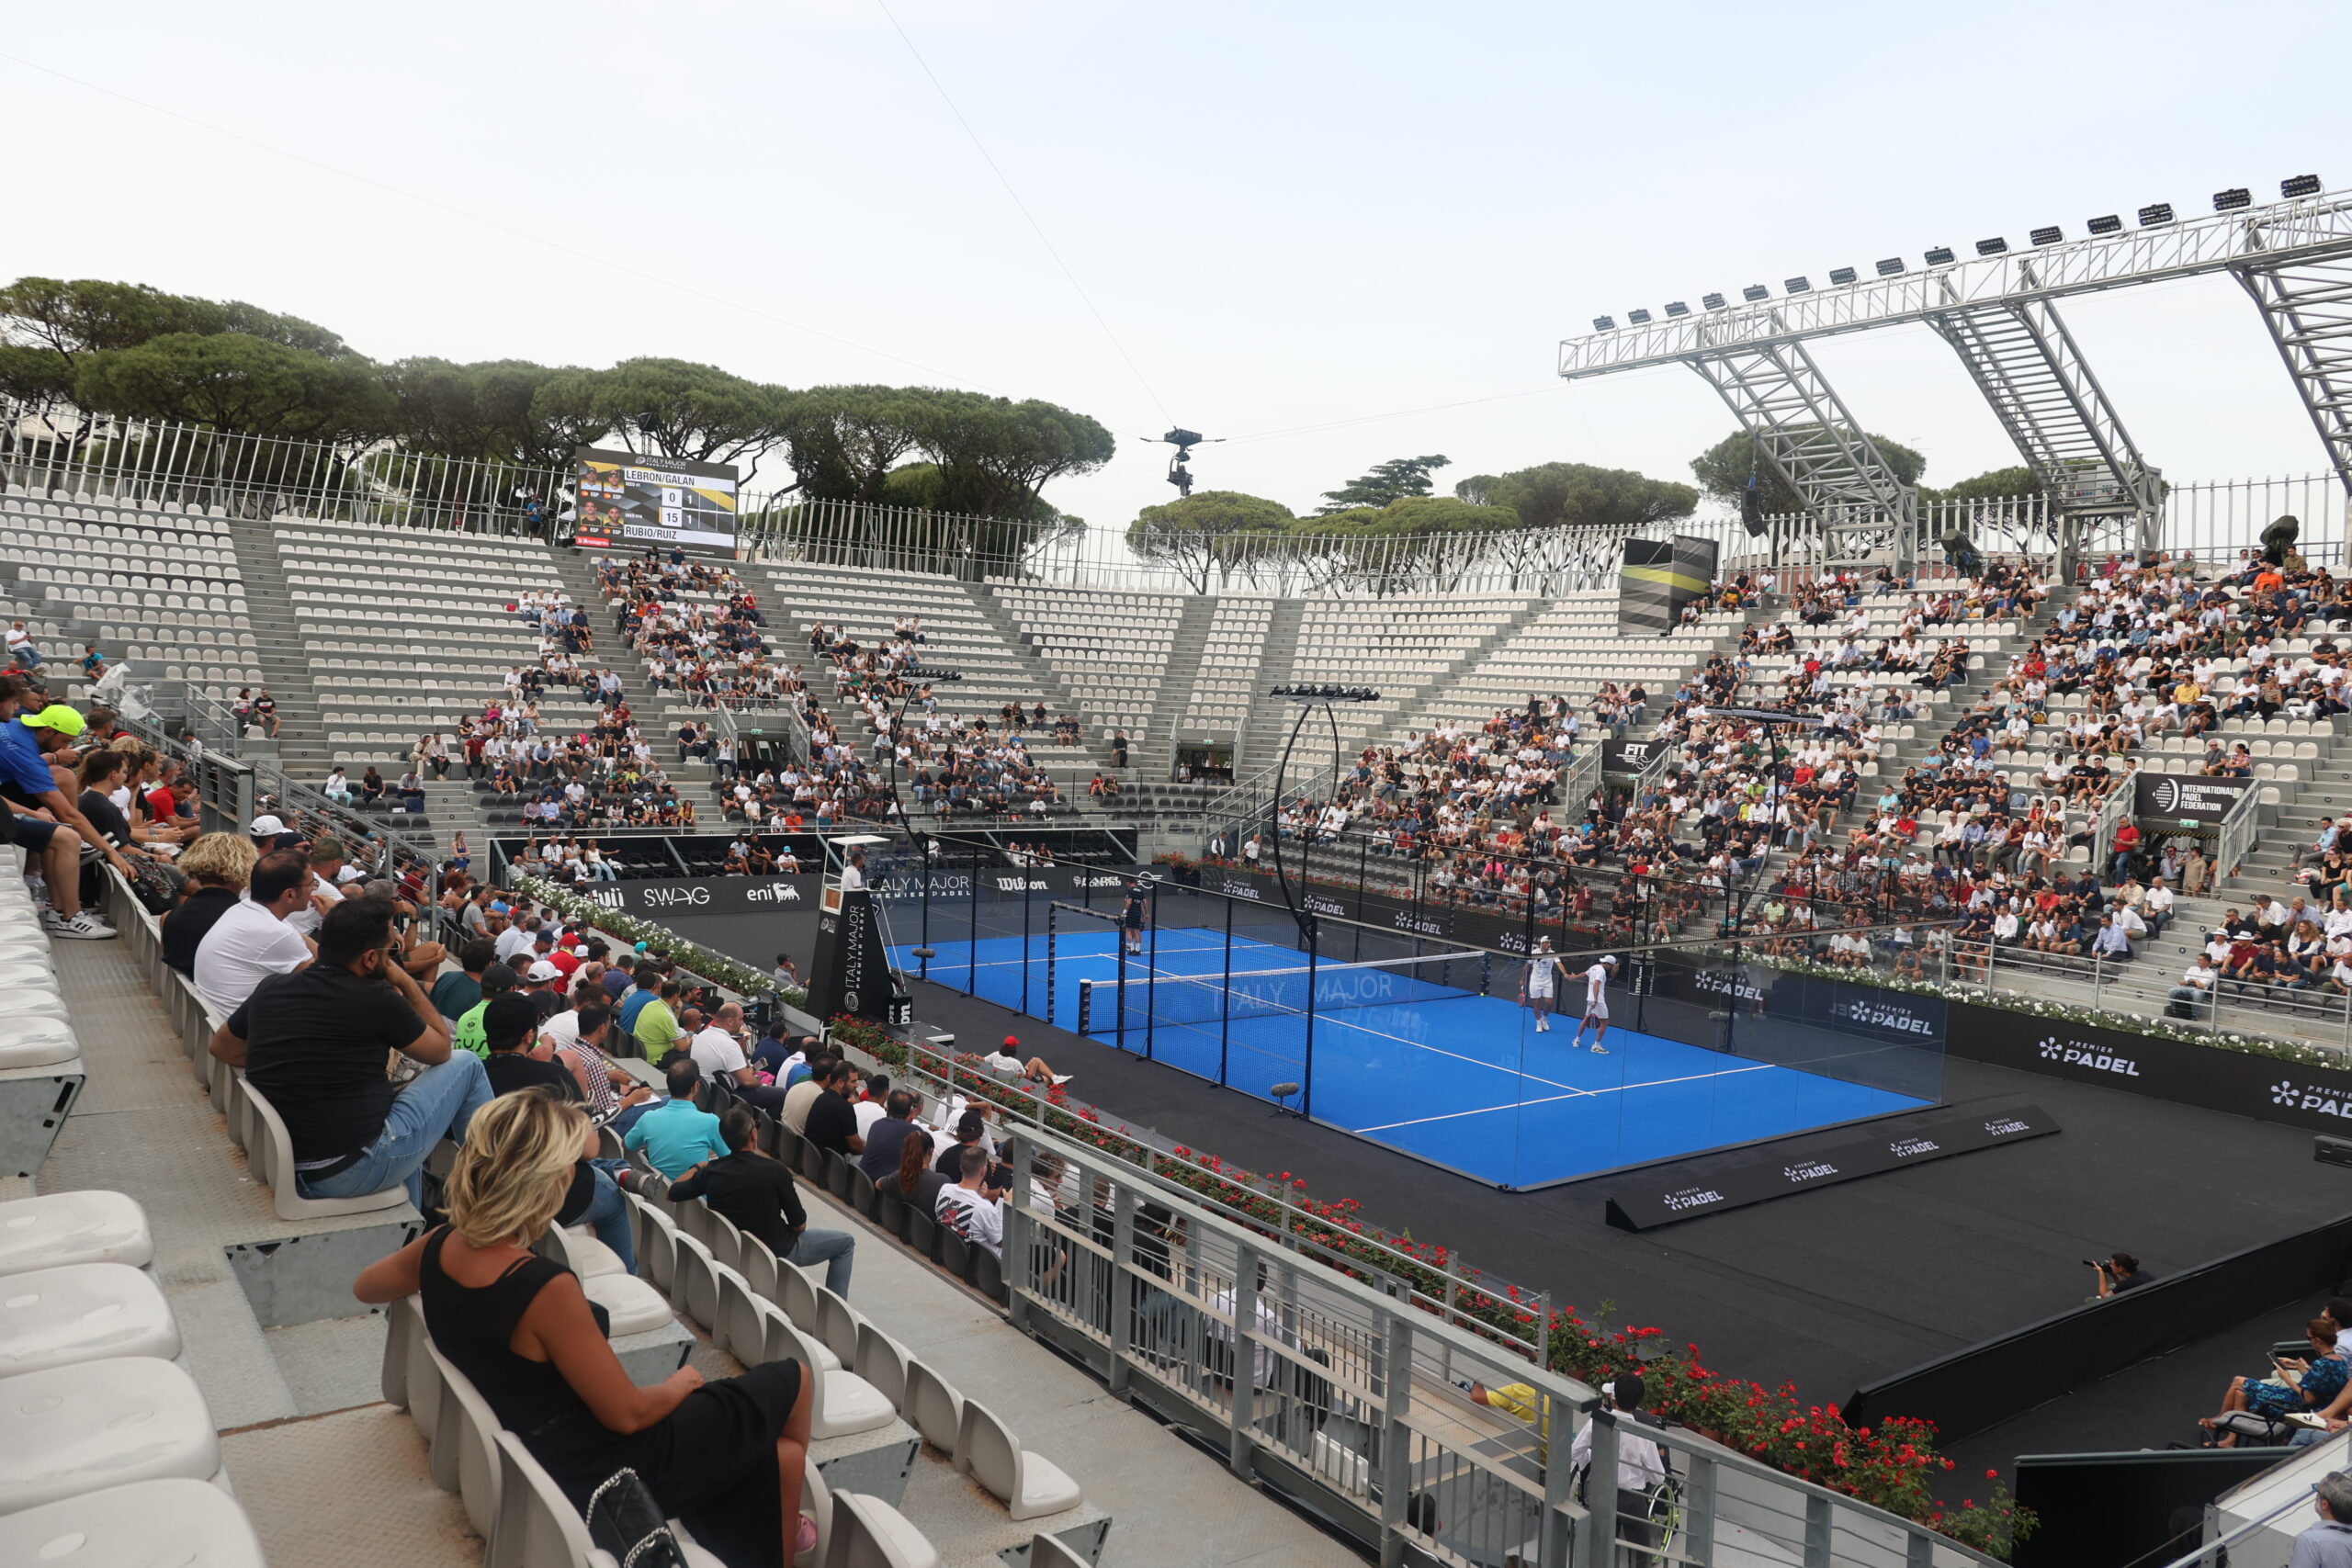 GS Arena (center court) Italy Major Premier Padel